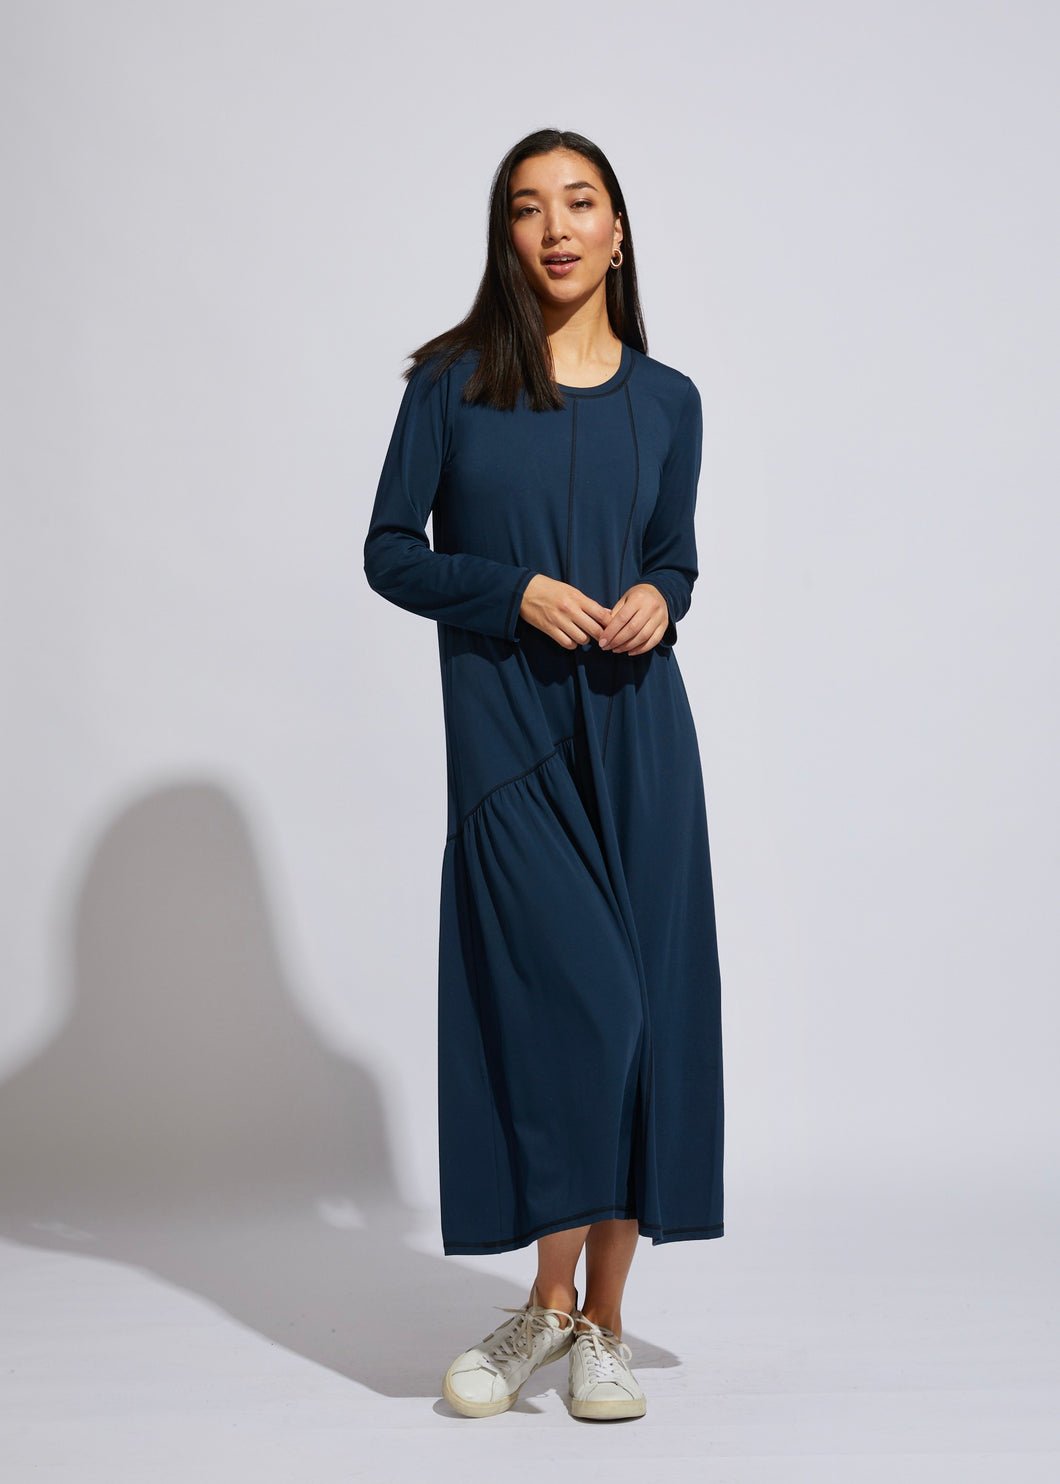 ld & Co  Elemental Teal Long Sleeve Panel Dress - Sizes:  M  L  XL